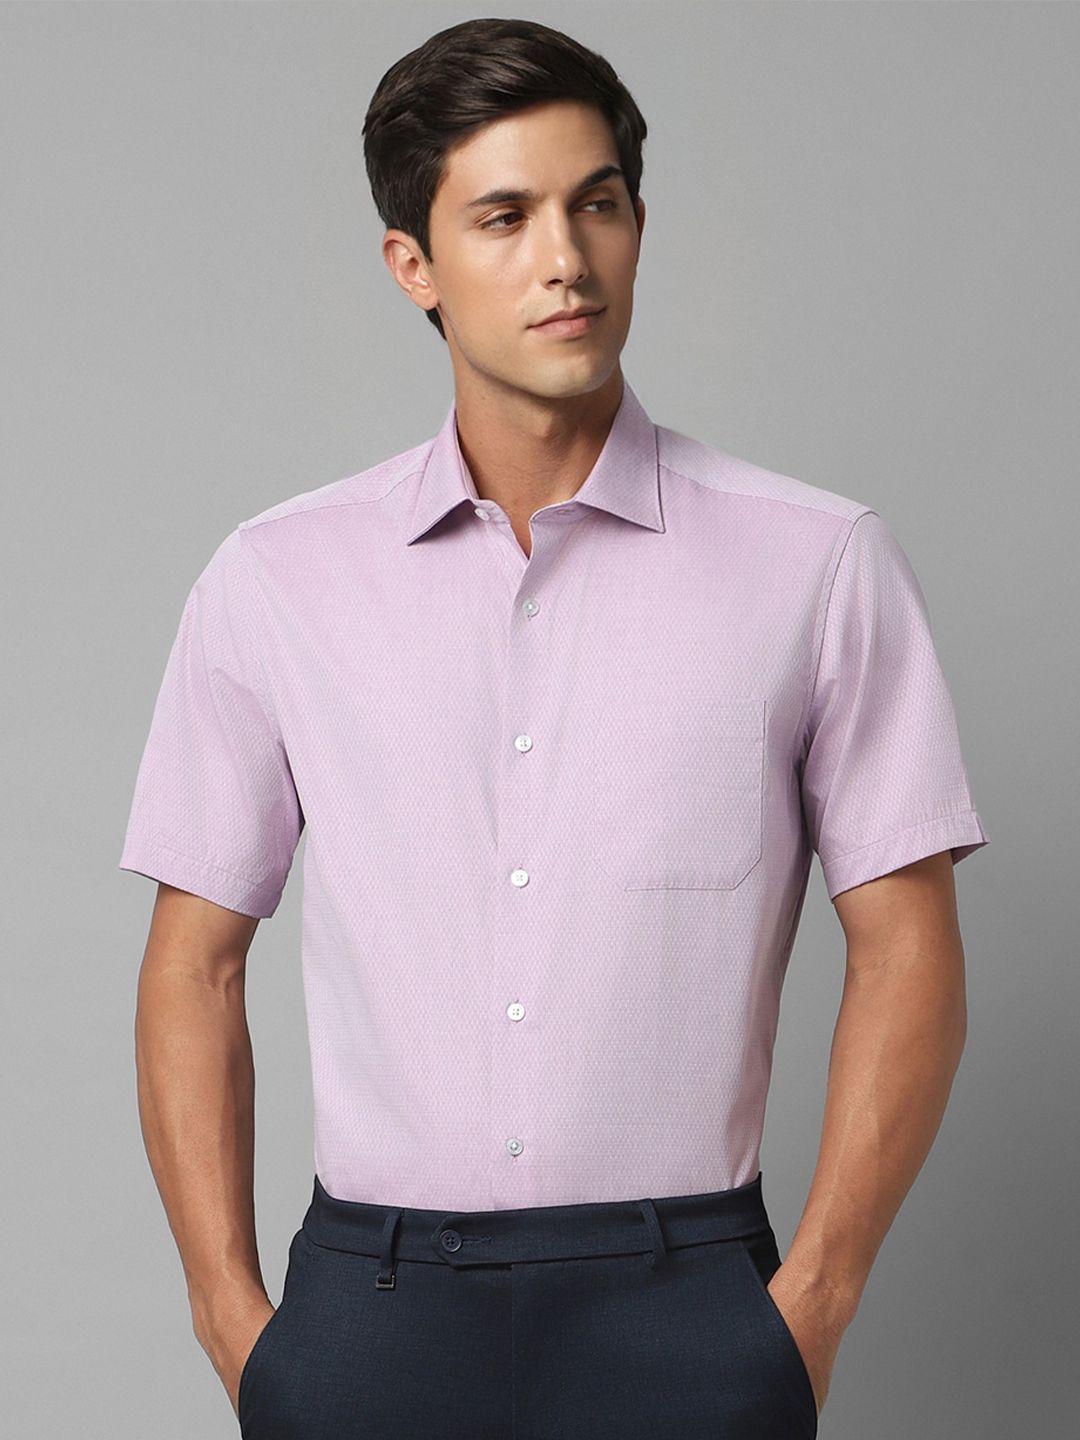 louis philippe spread collar cotton formal shirt